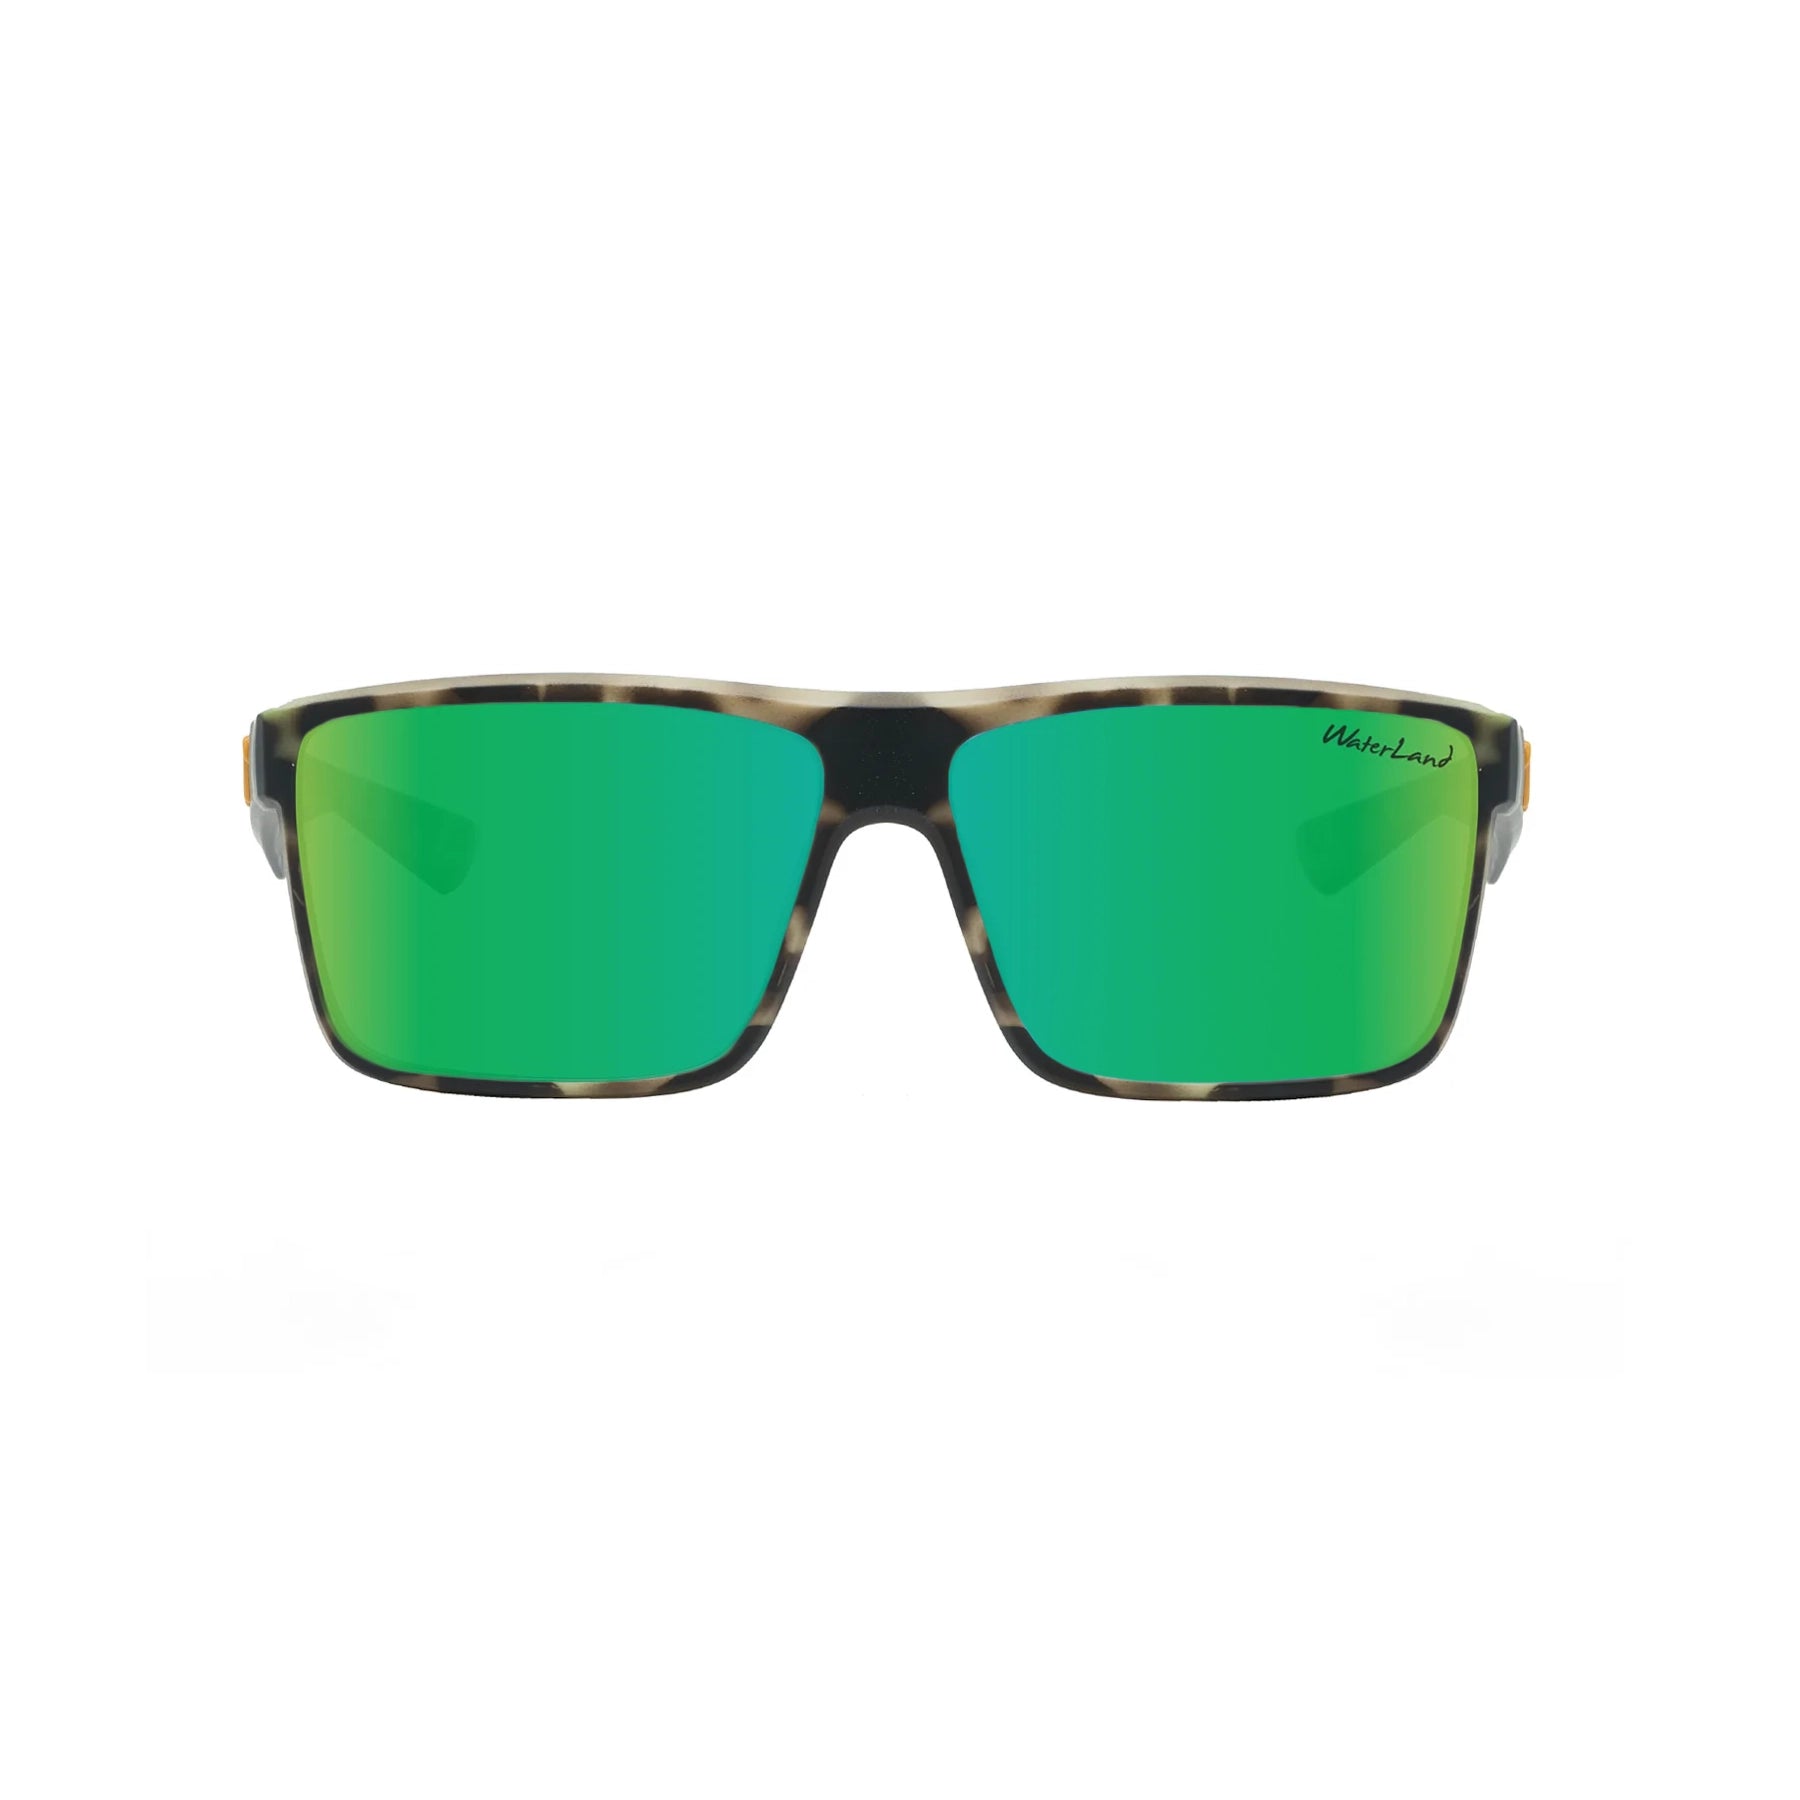 Waterland Hybro Sunglasses Black/Green Mirror